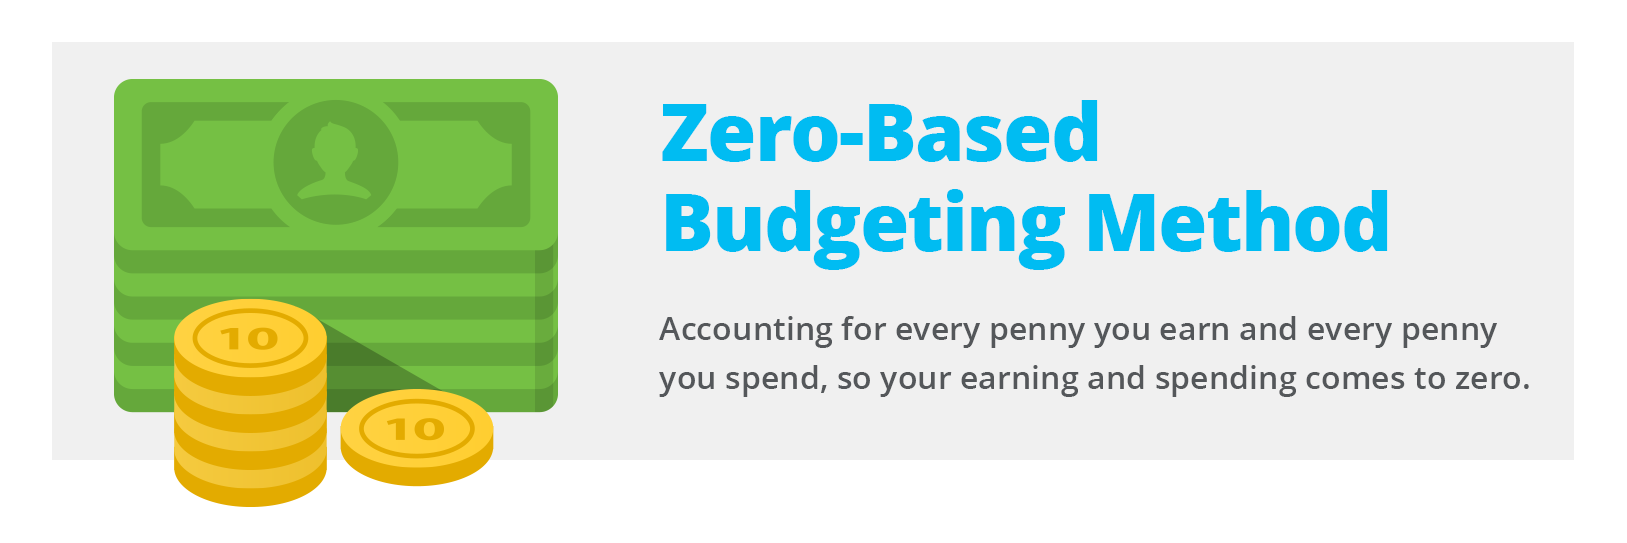 Zero-based budgeting method